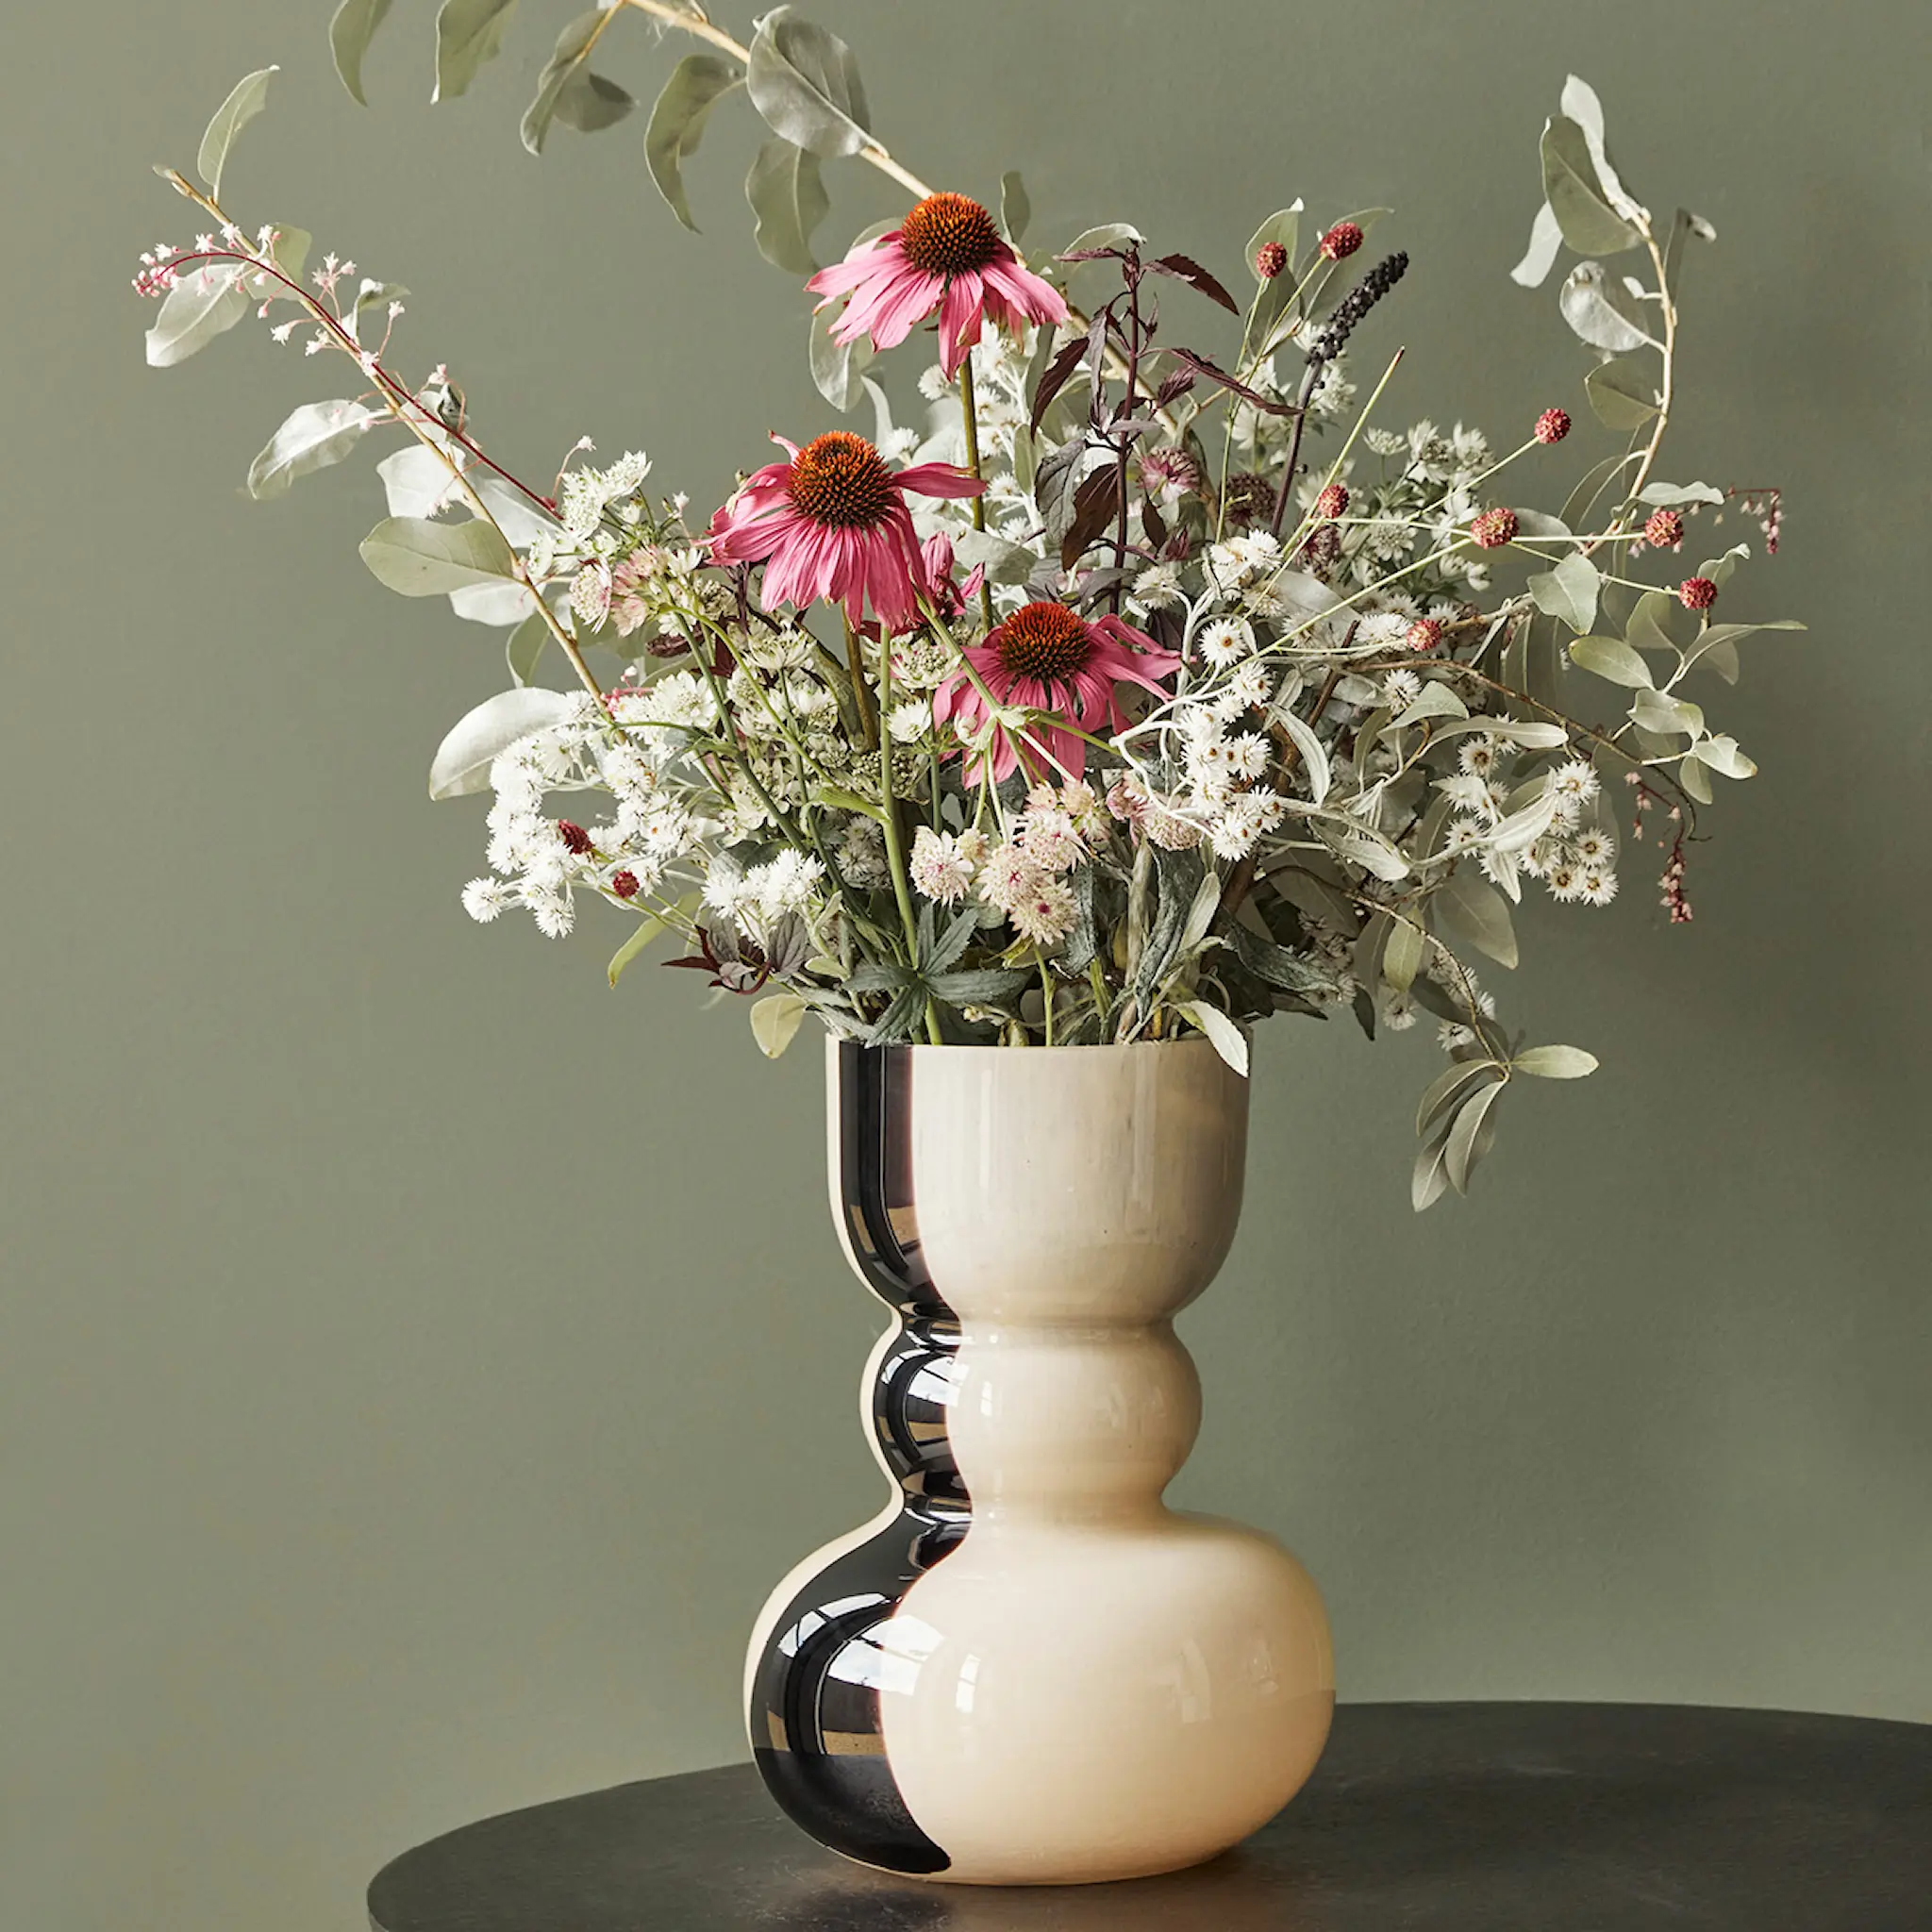 House Doctor Pilu vase 27,5 cm svart/brun